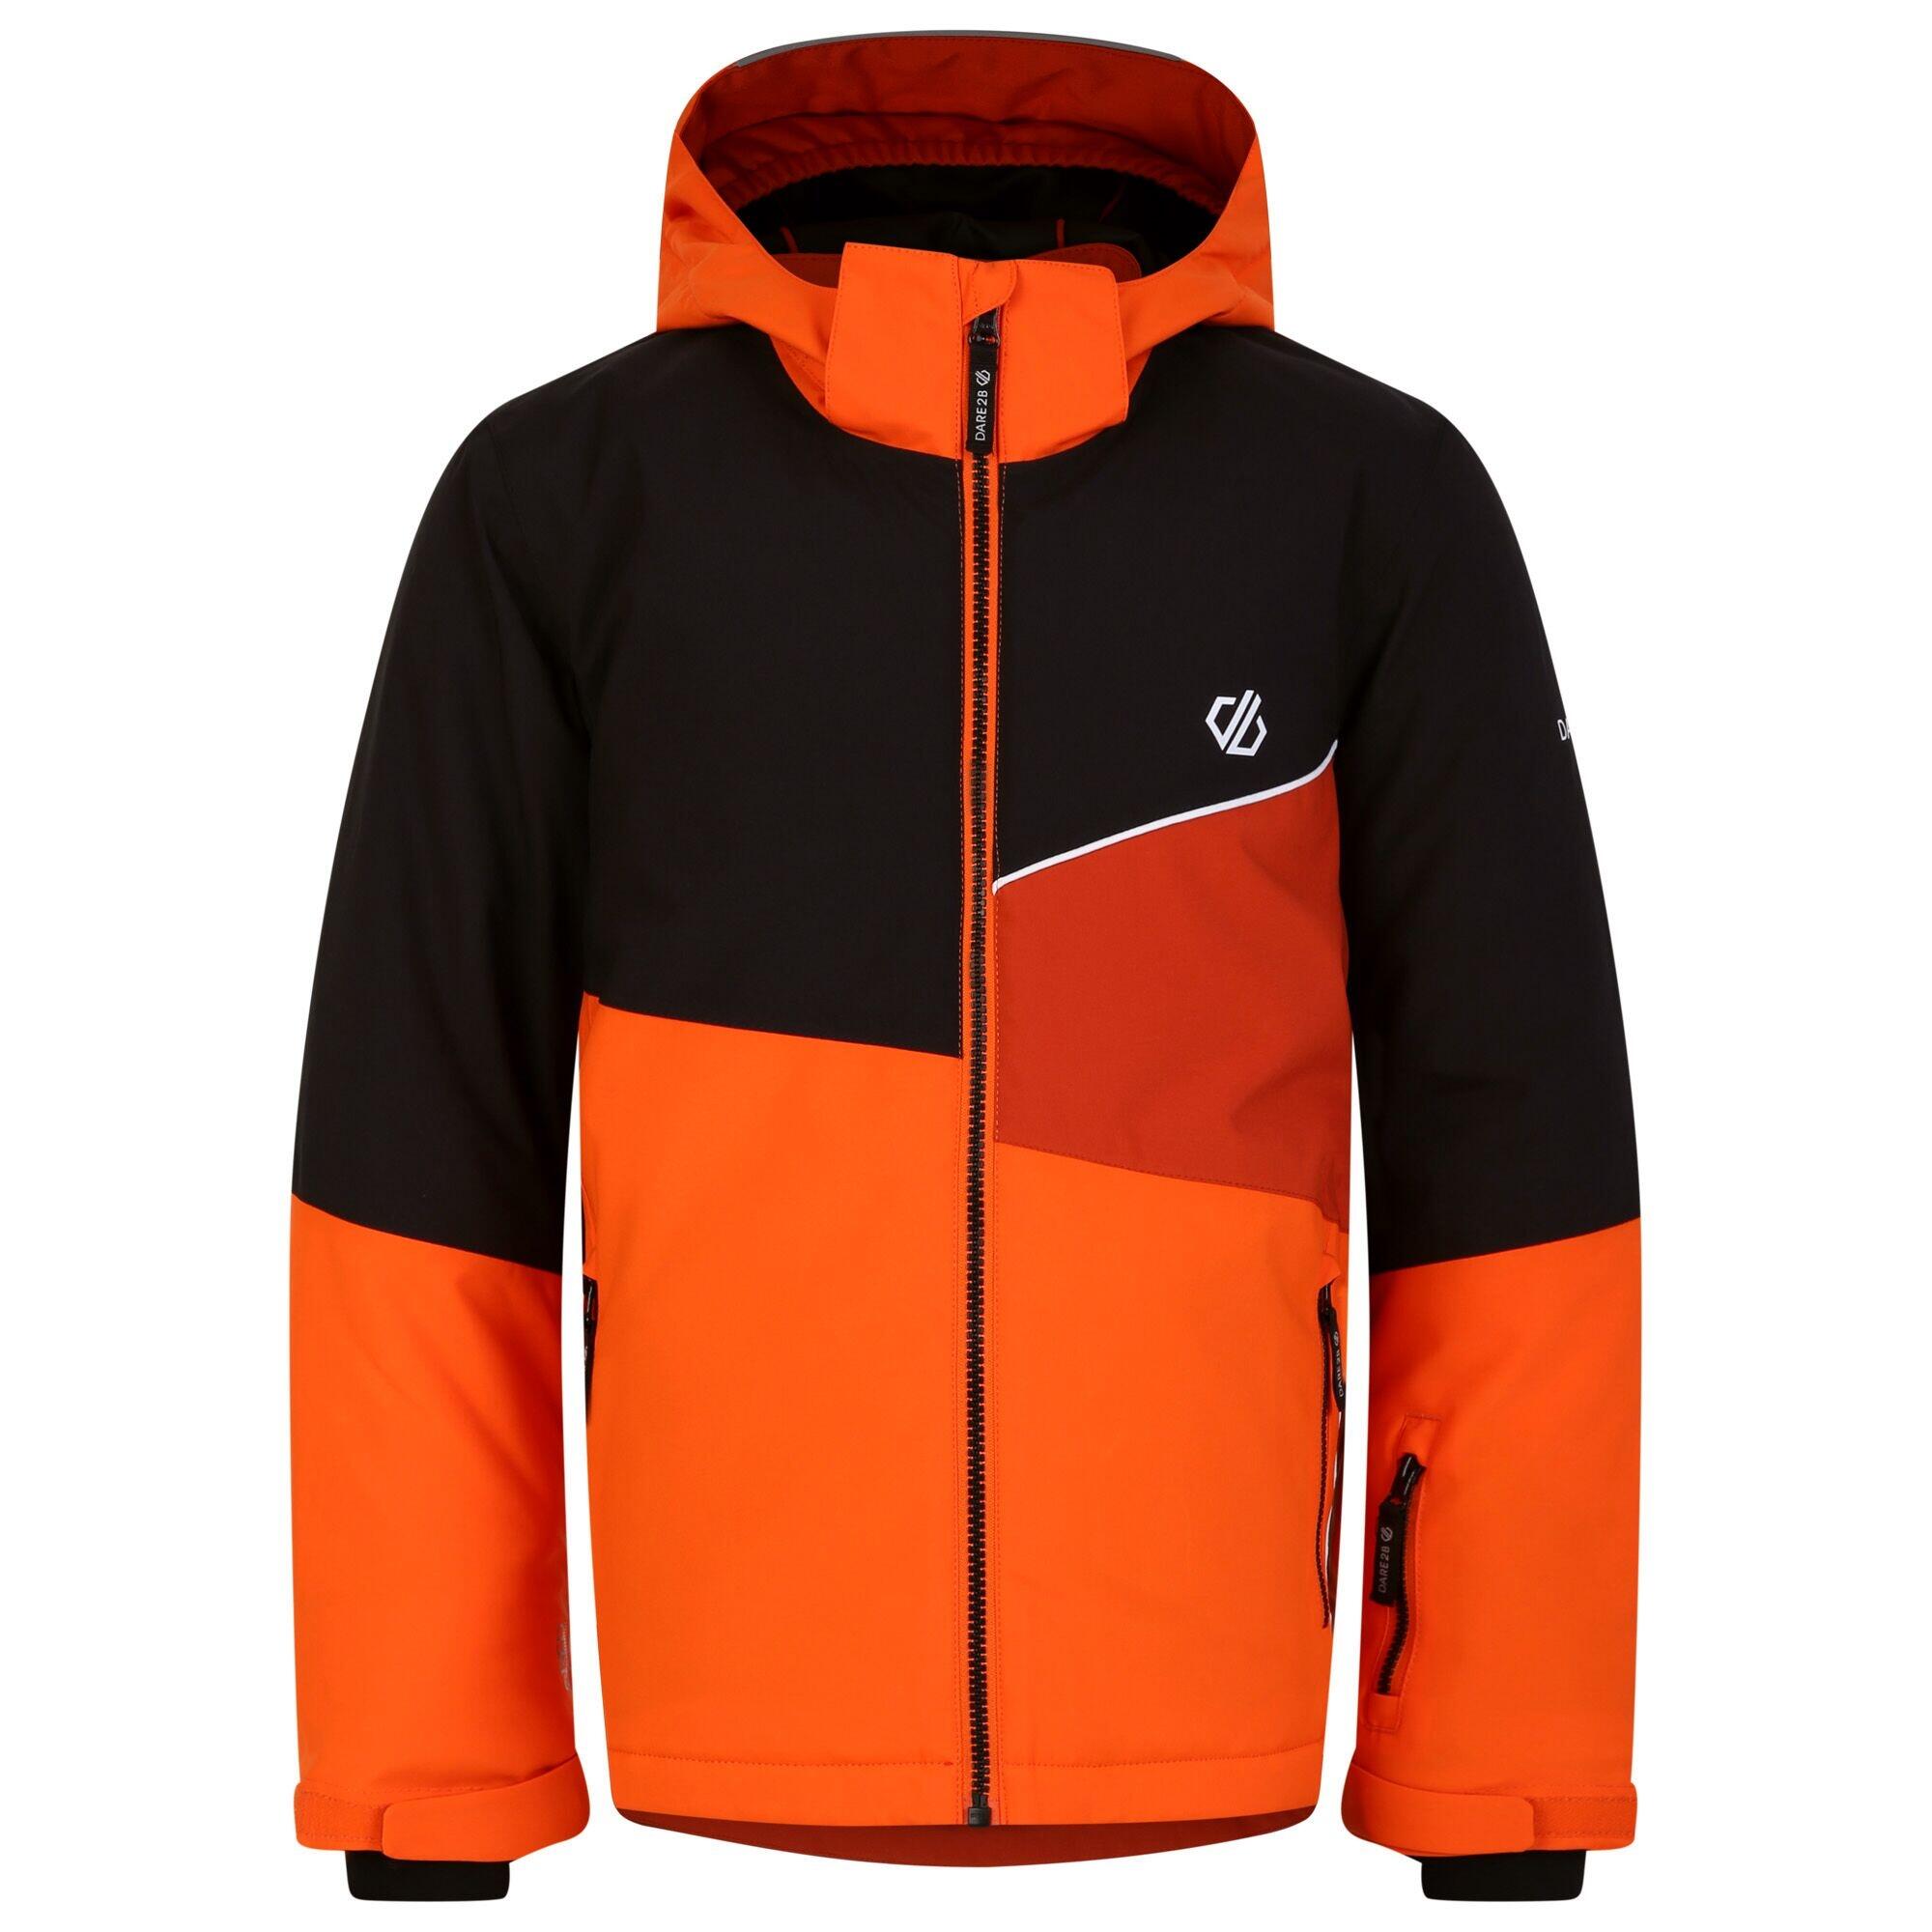 Childrens/Kids Steazy Ski Jacket (Puffins Orange/Black) 1/5